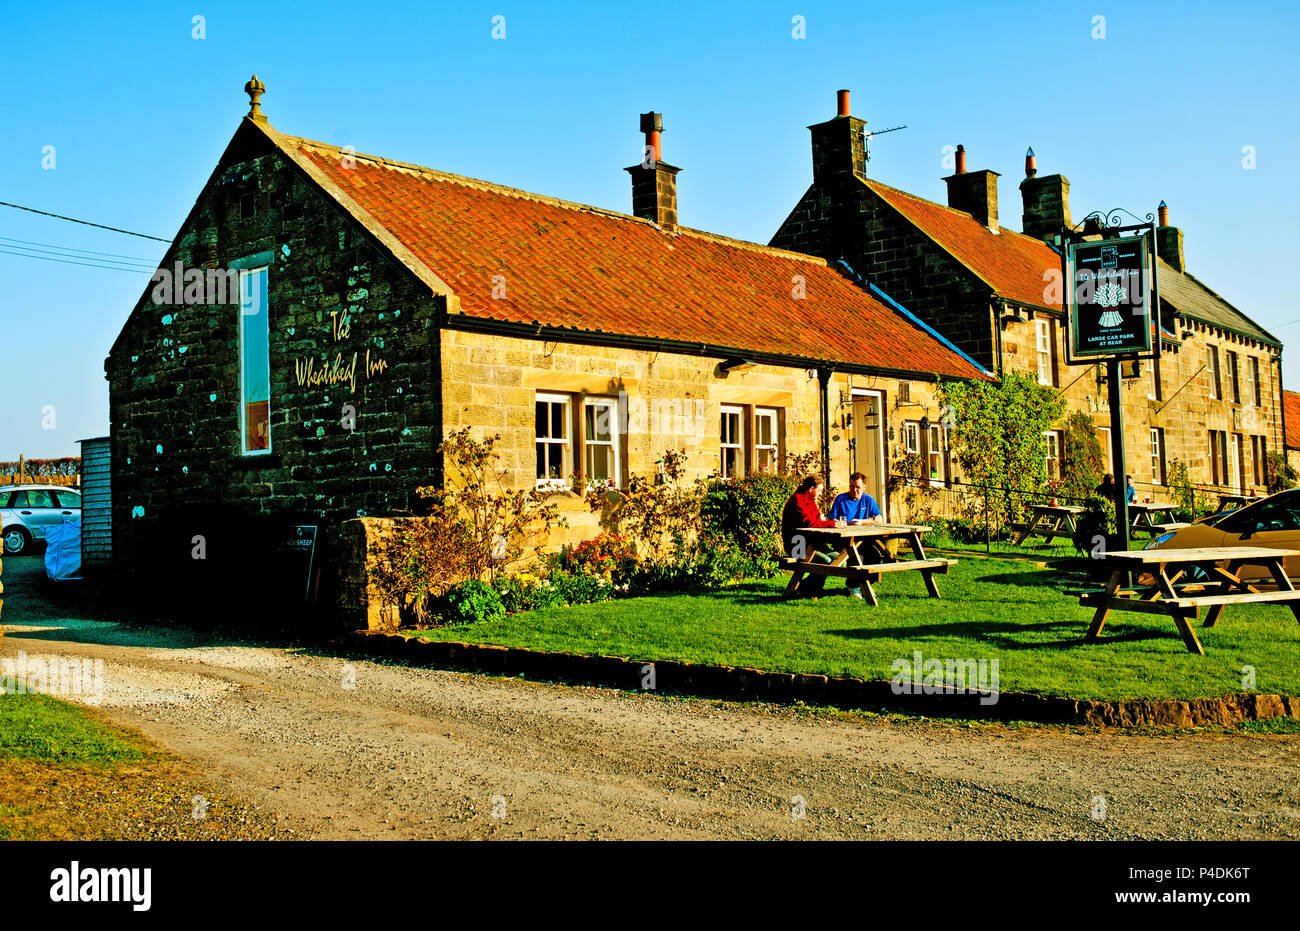 The wheatsheaf Inn, Egton, North Yorkshire Moors, England Stock Photo